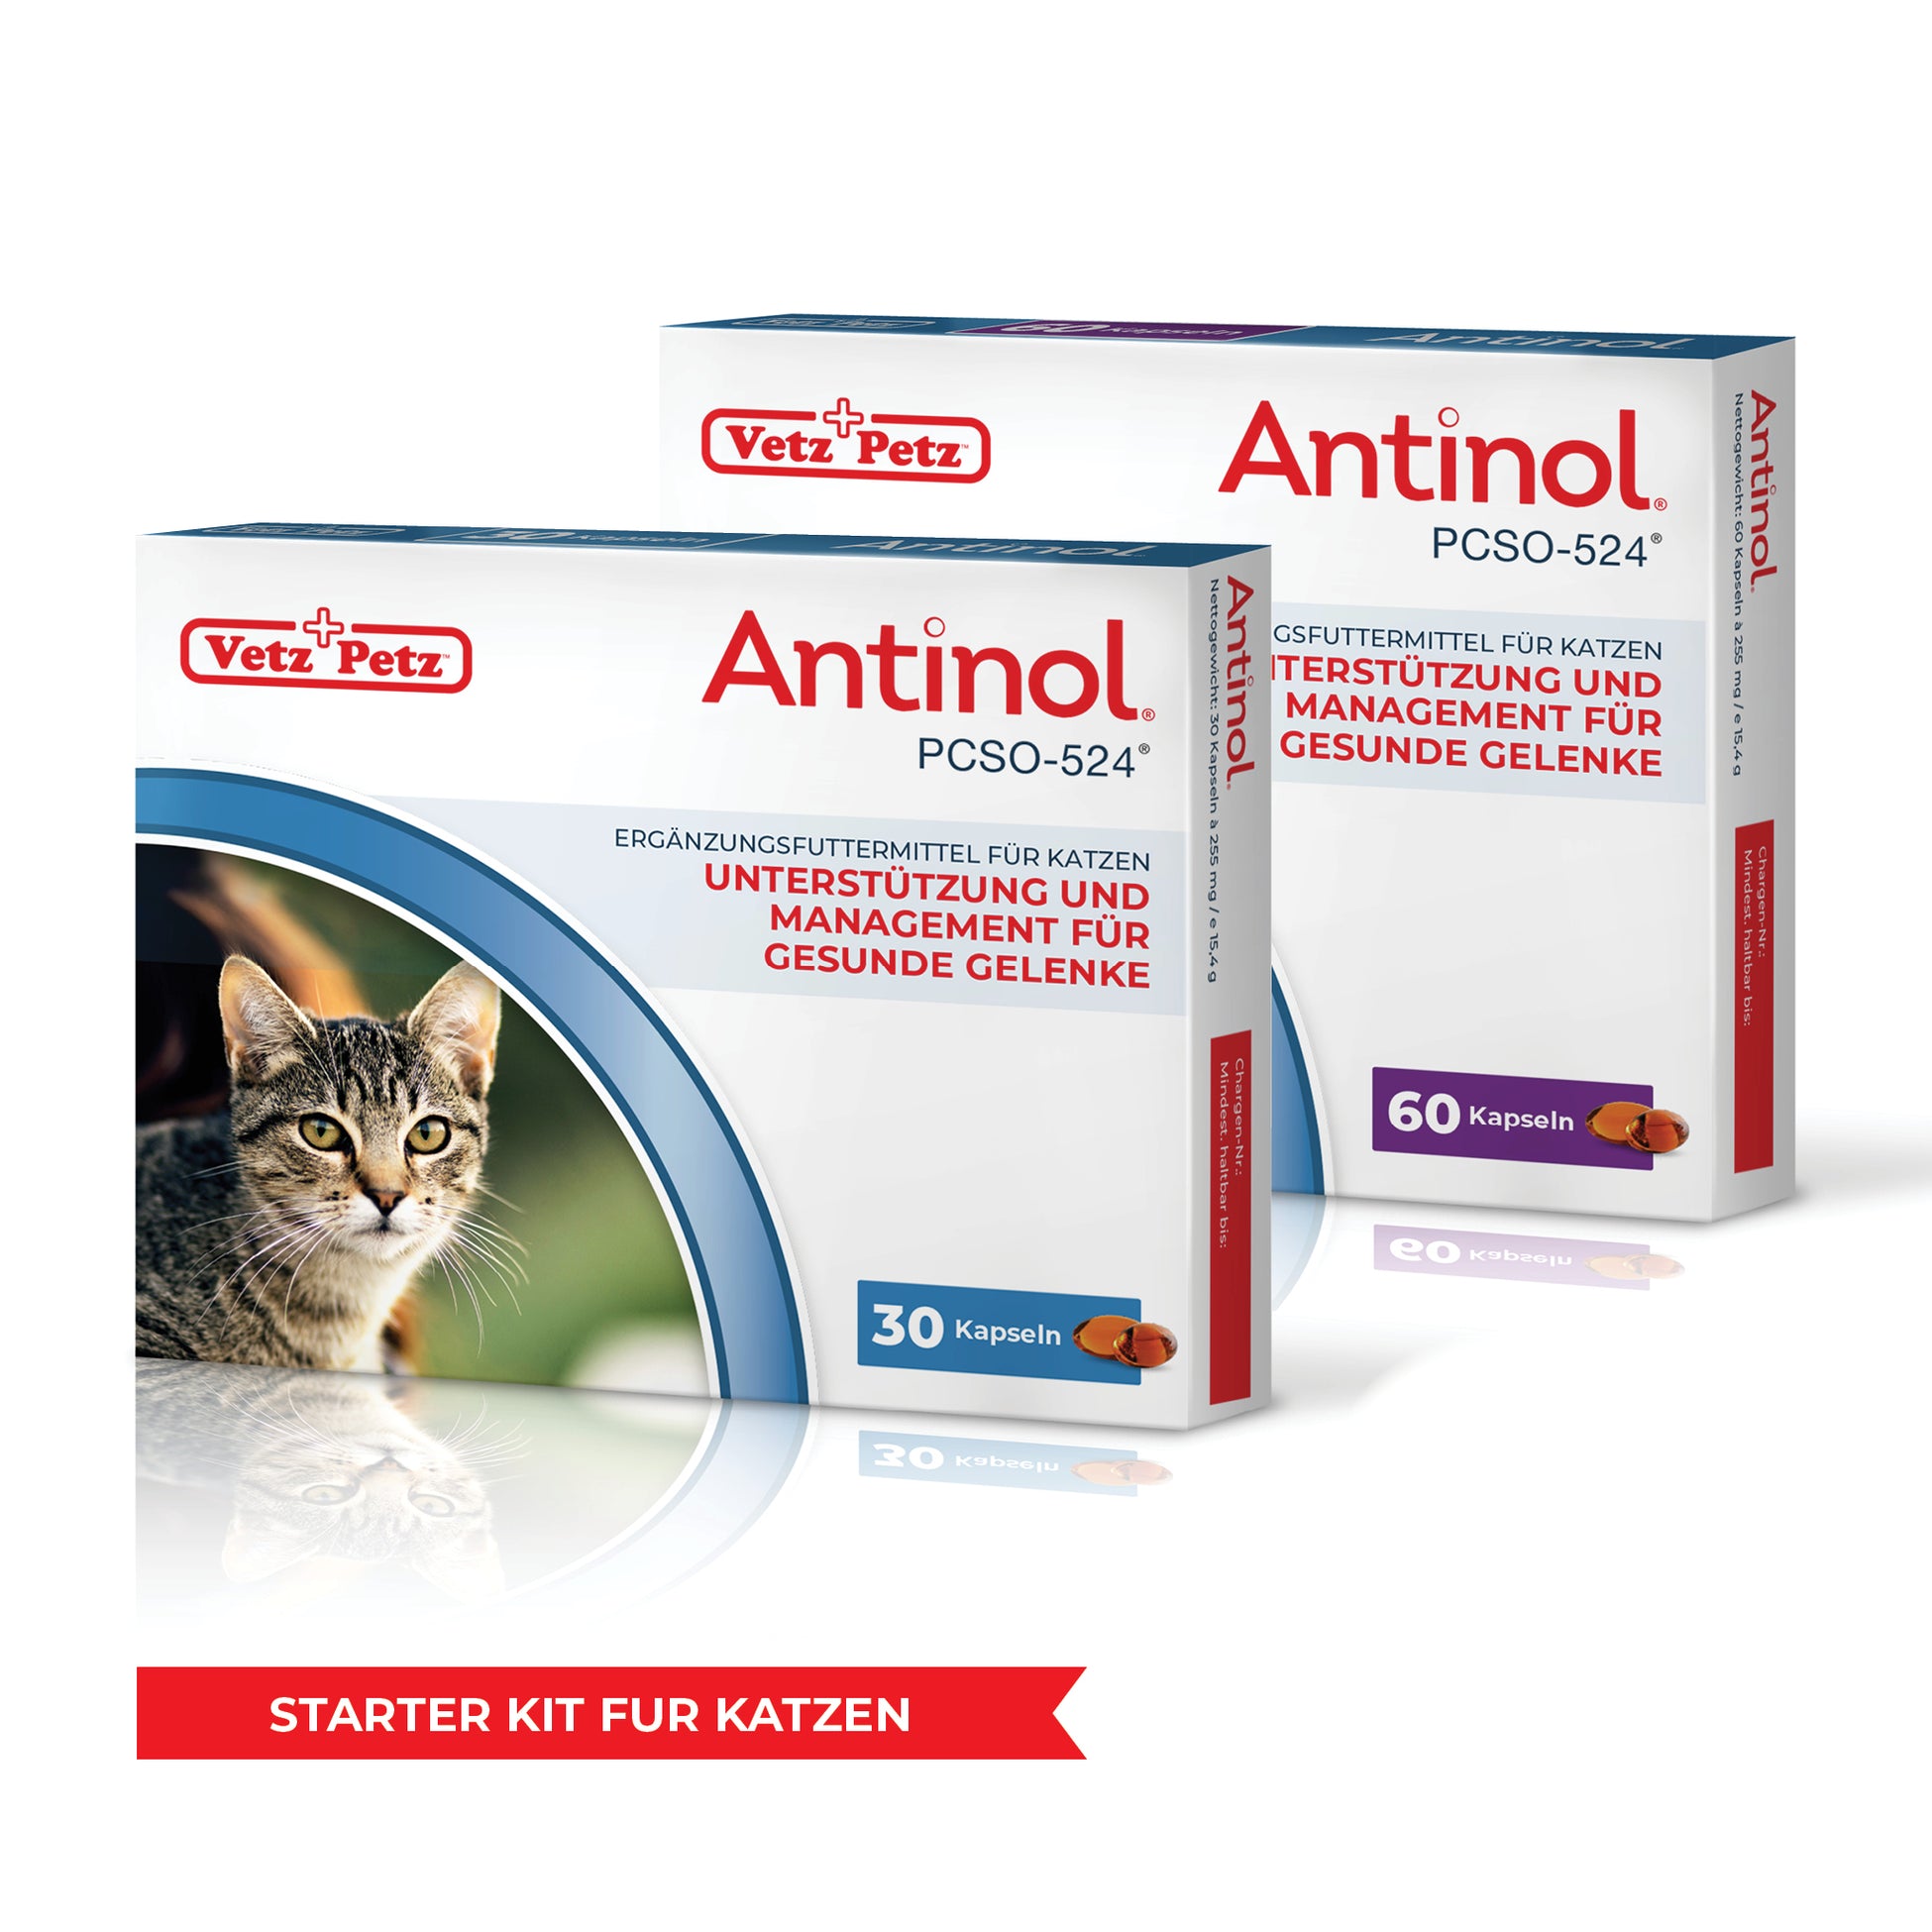 Antinol Starter Kit Cats